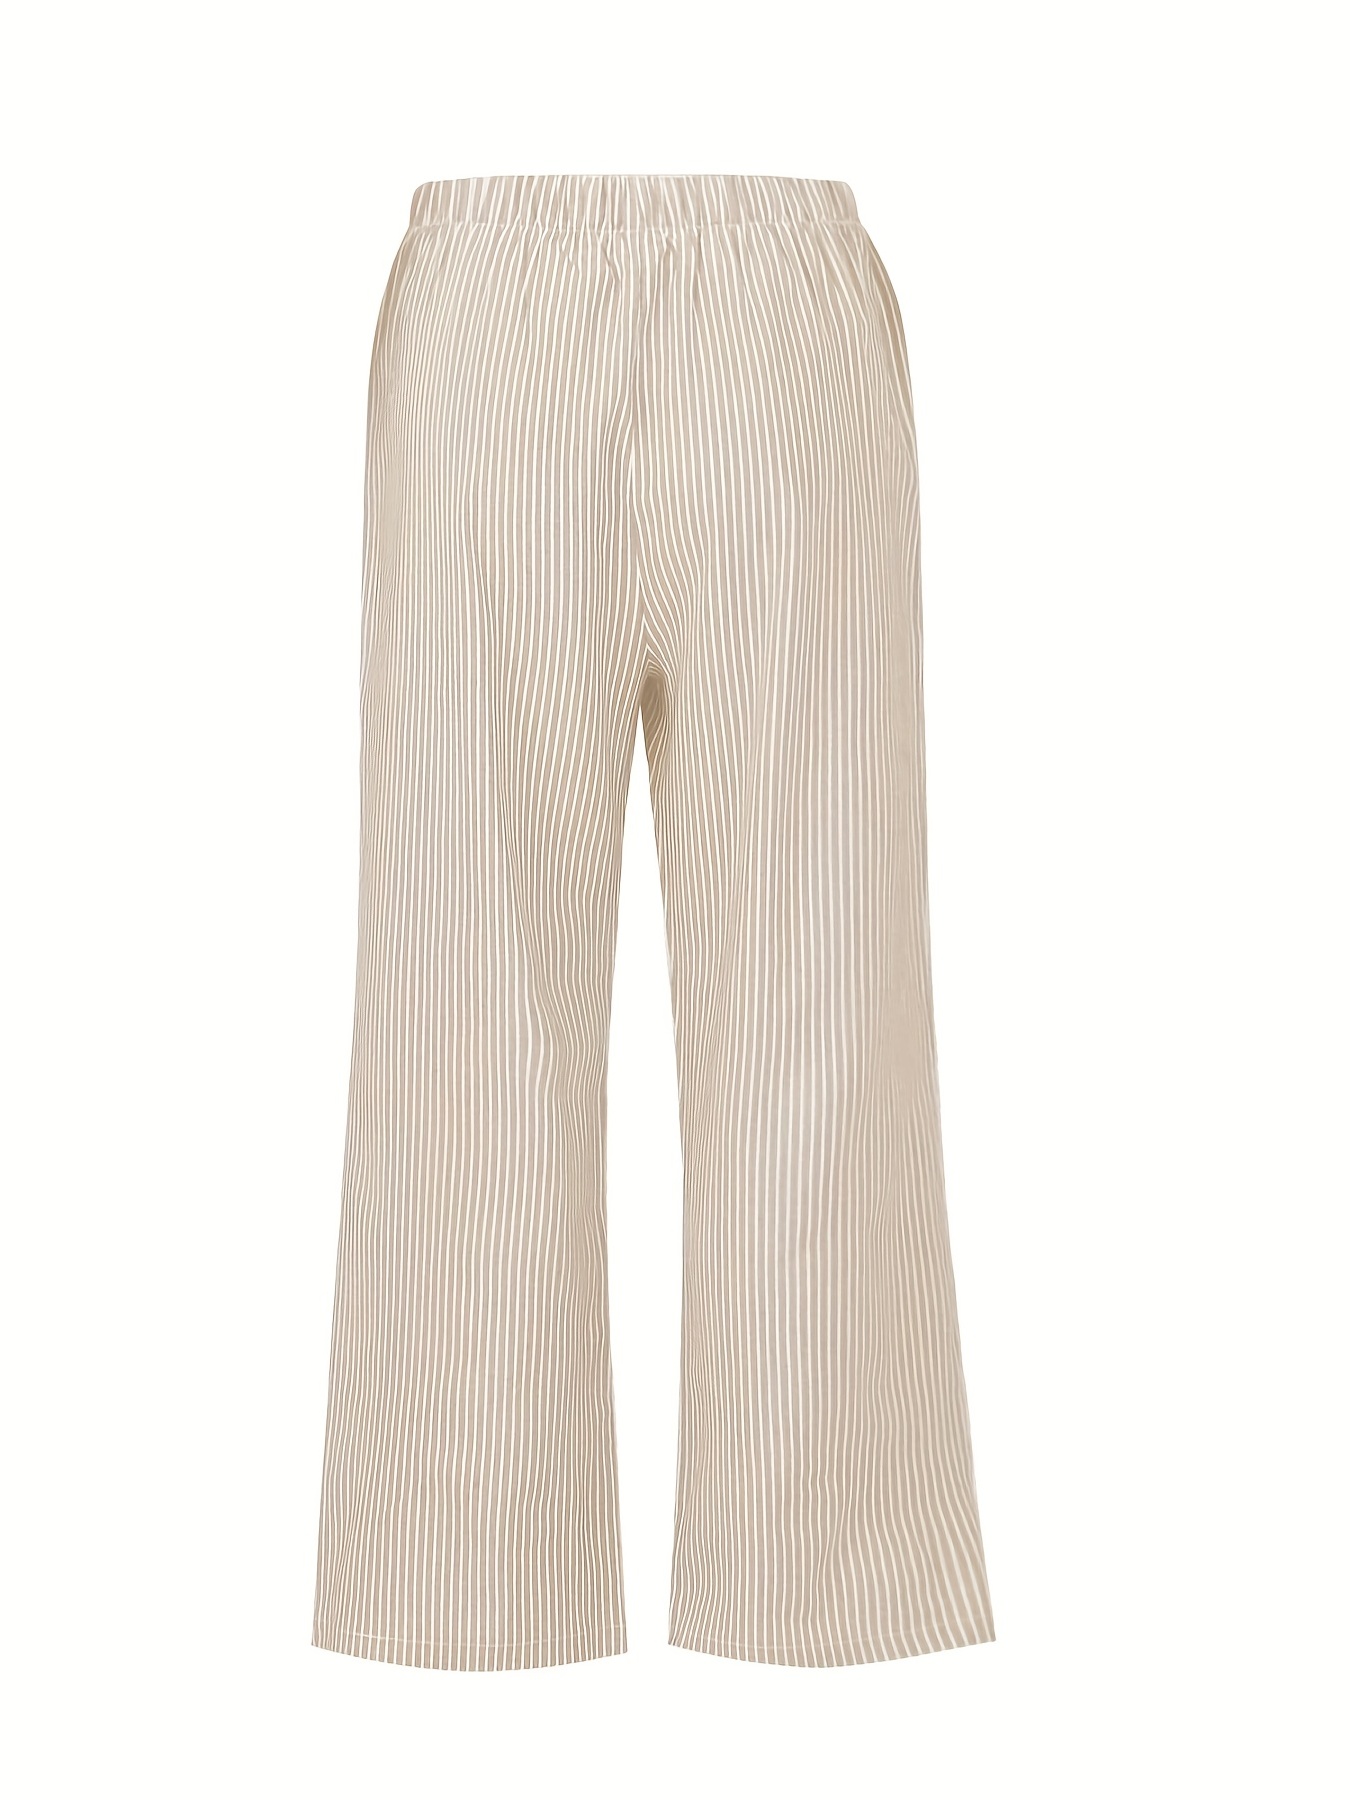 Women's Pants Wide Middle Waist Stripe Casual Pants (Size: FREE SIZE) #785,  #955, #9529